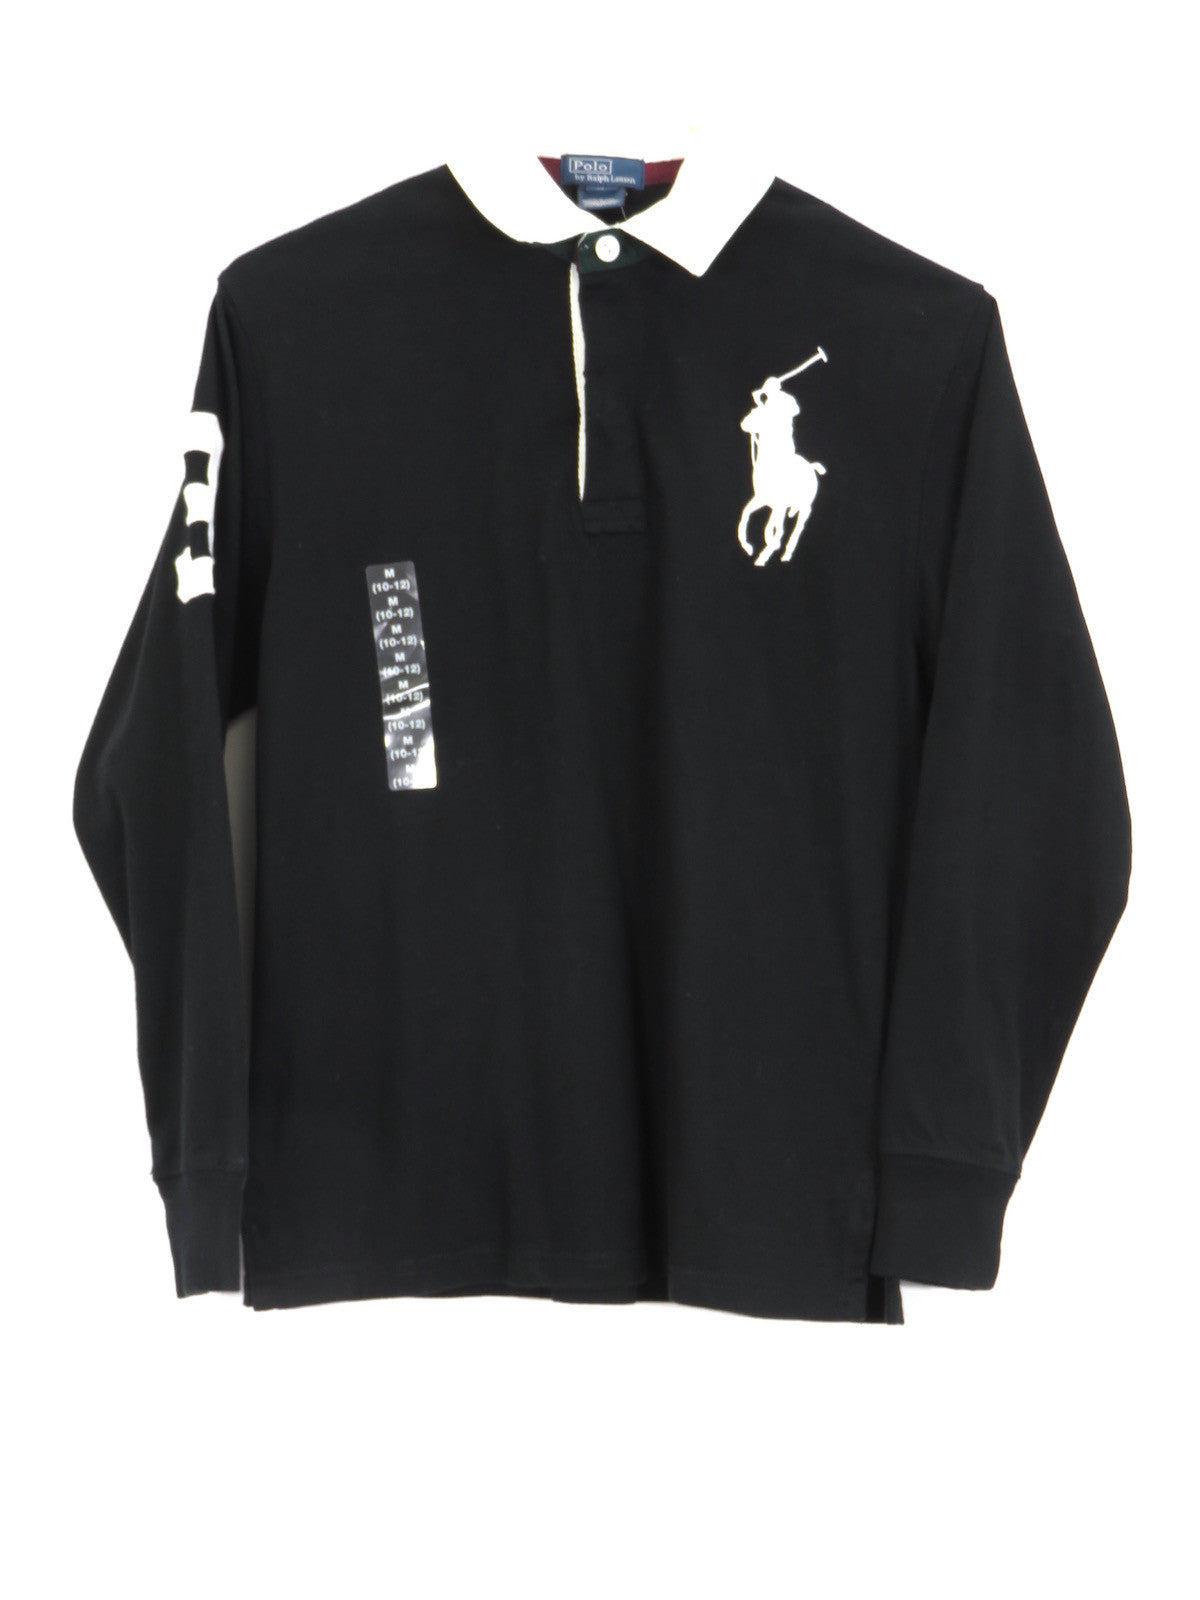 black polo jacket with white horse